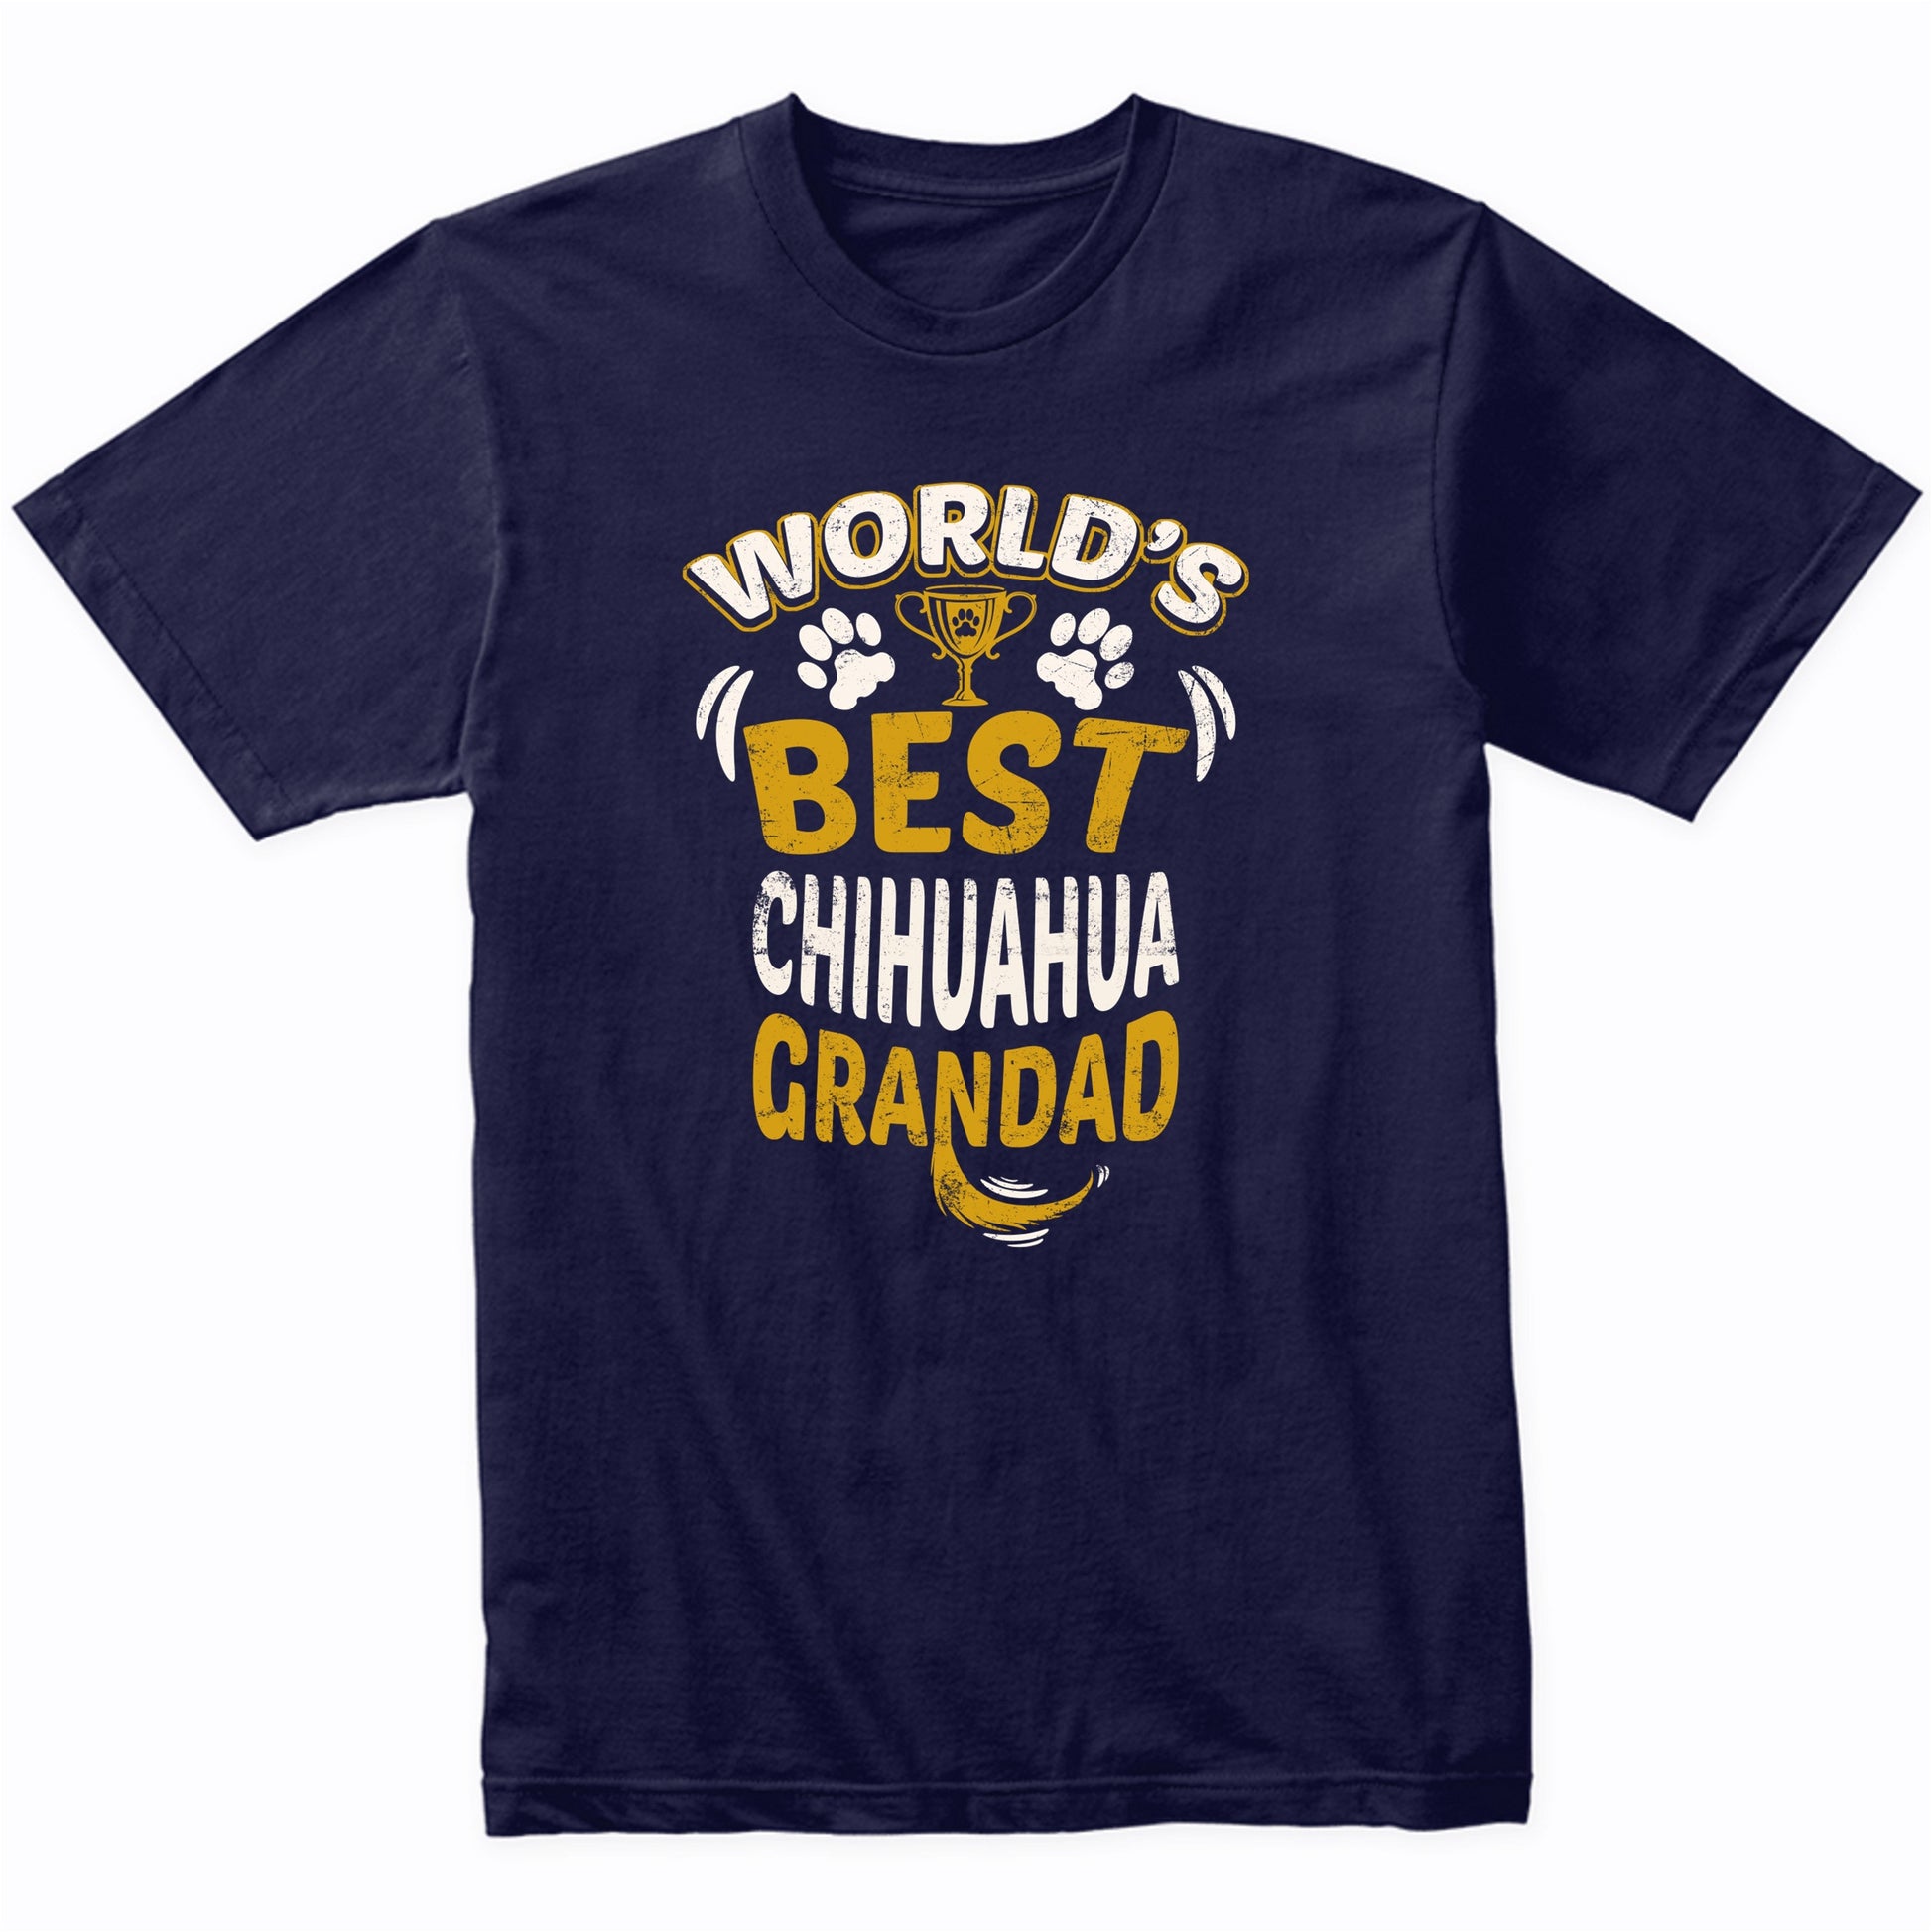 World's Best Chihuahua Grandad Graphic T-Shirt